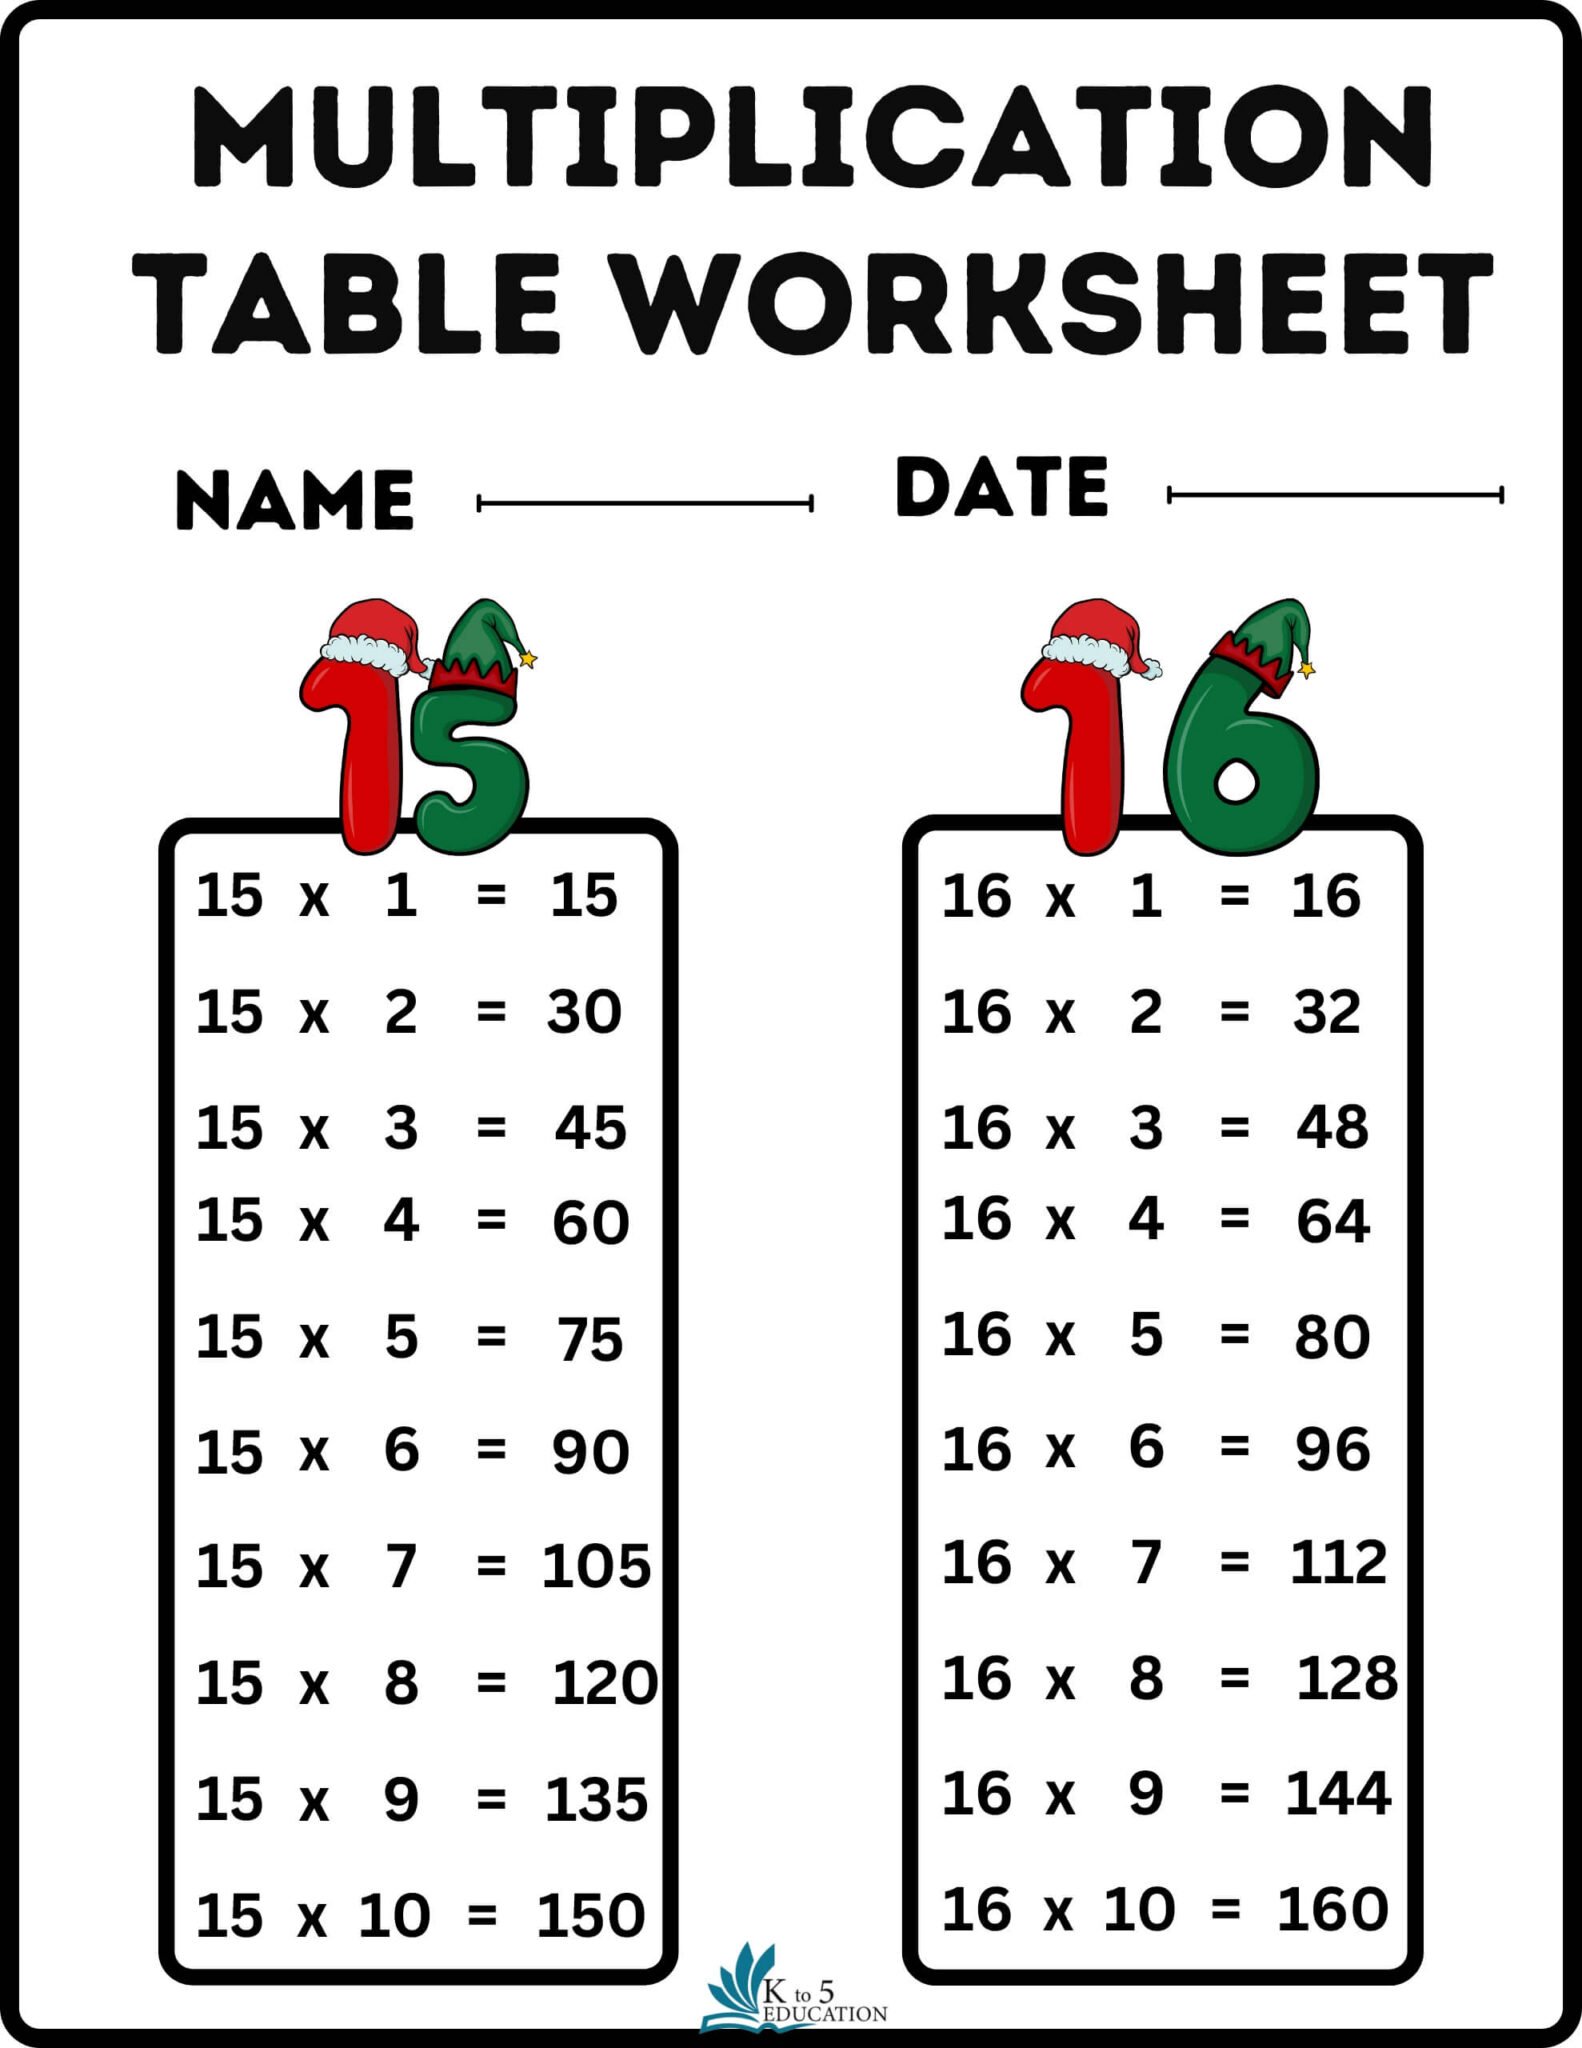 Worksheets For Multiplication Tables FREE Download